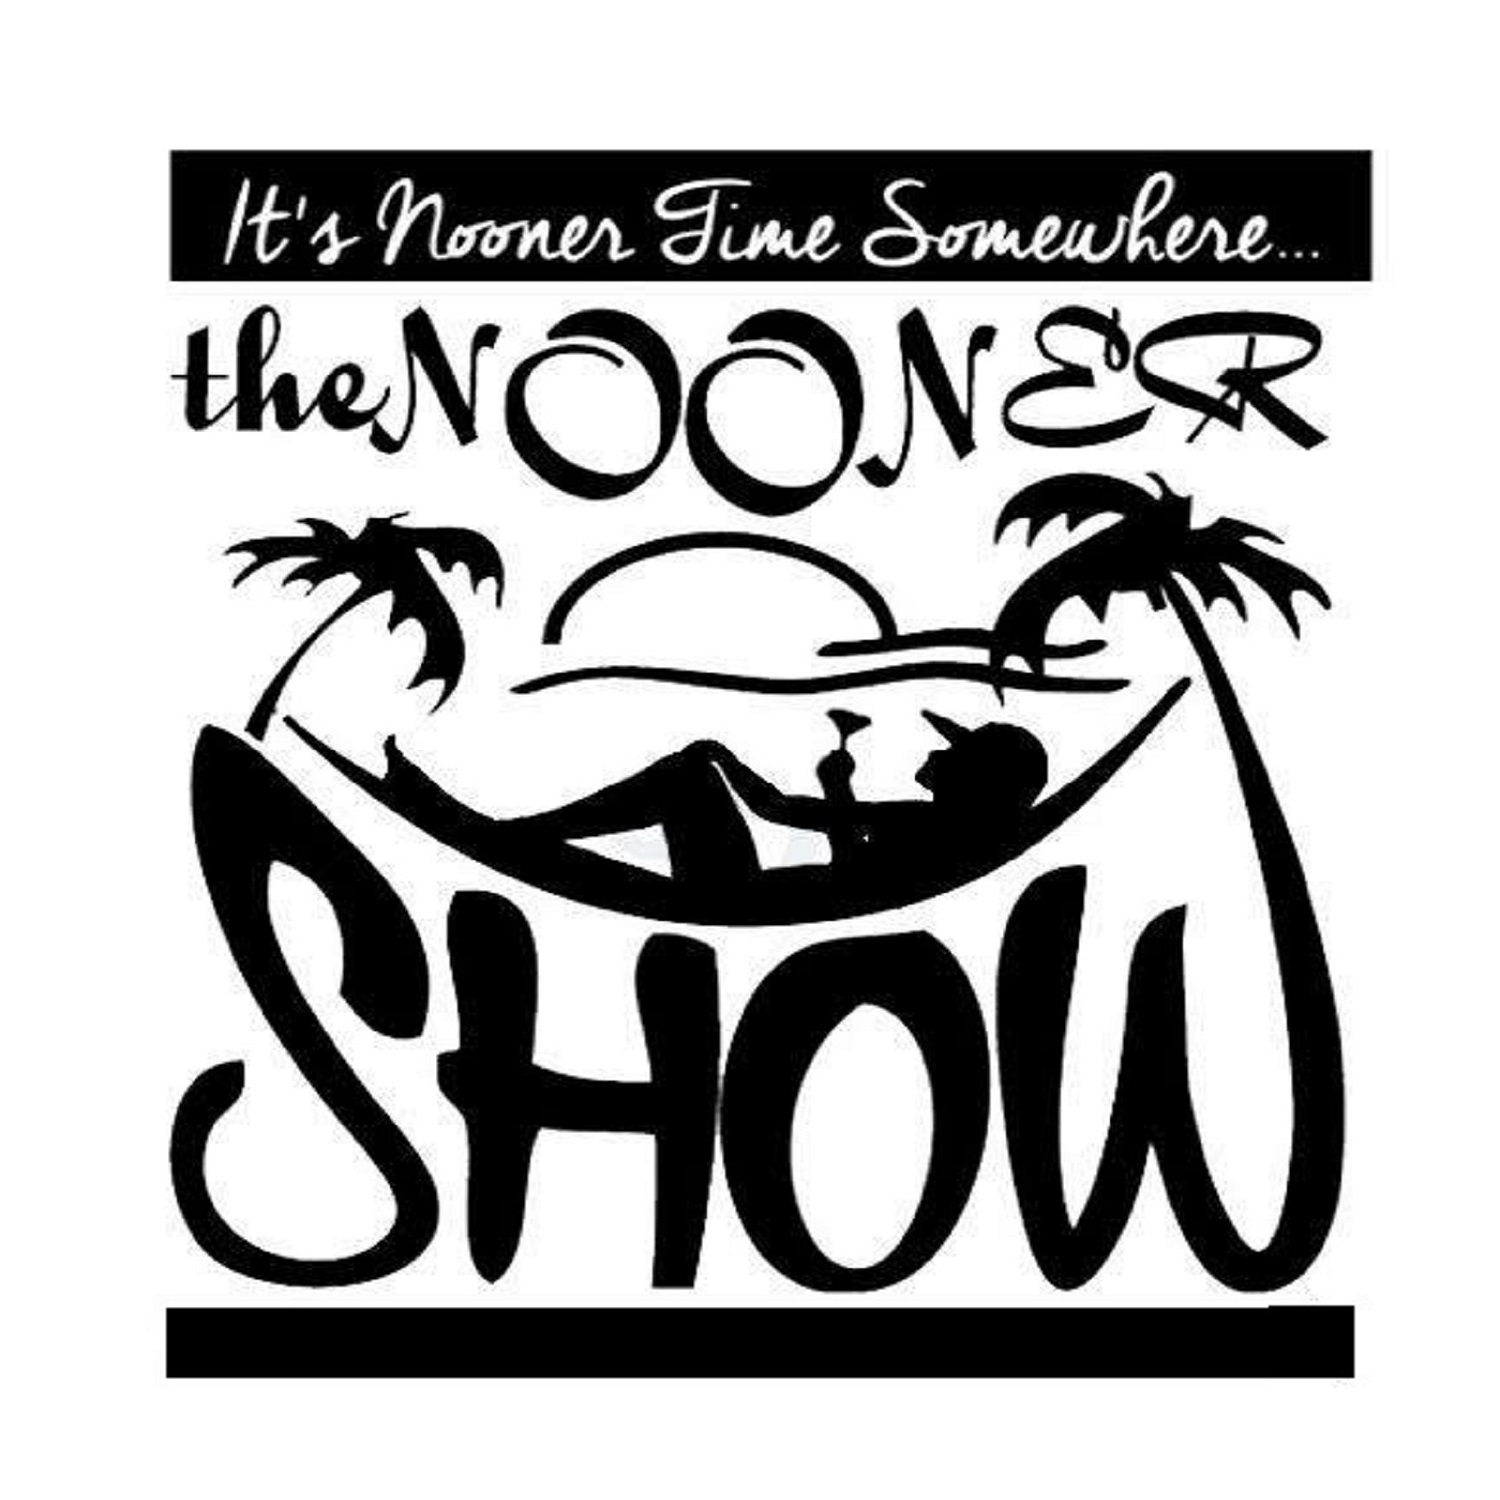 The Nooner Show – Episode 202